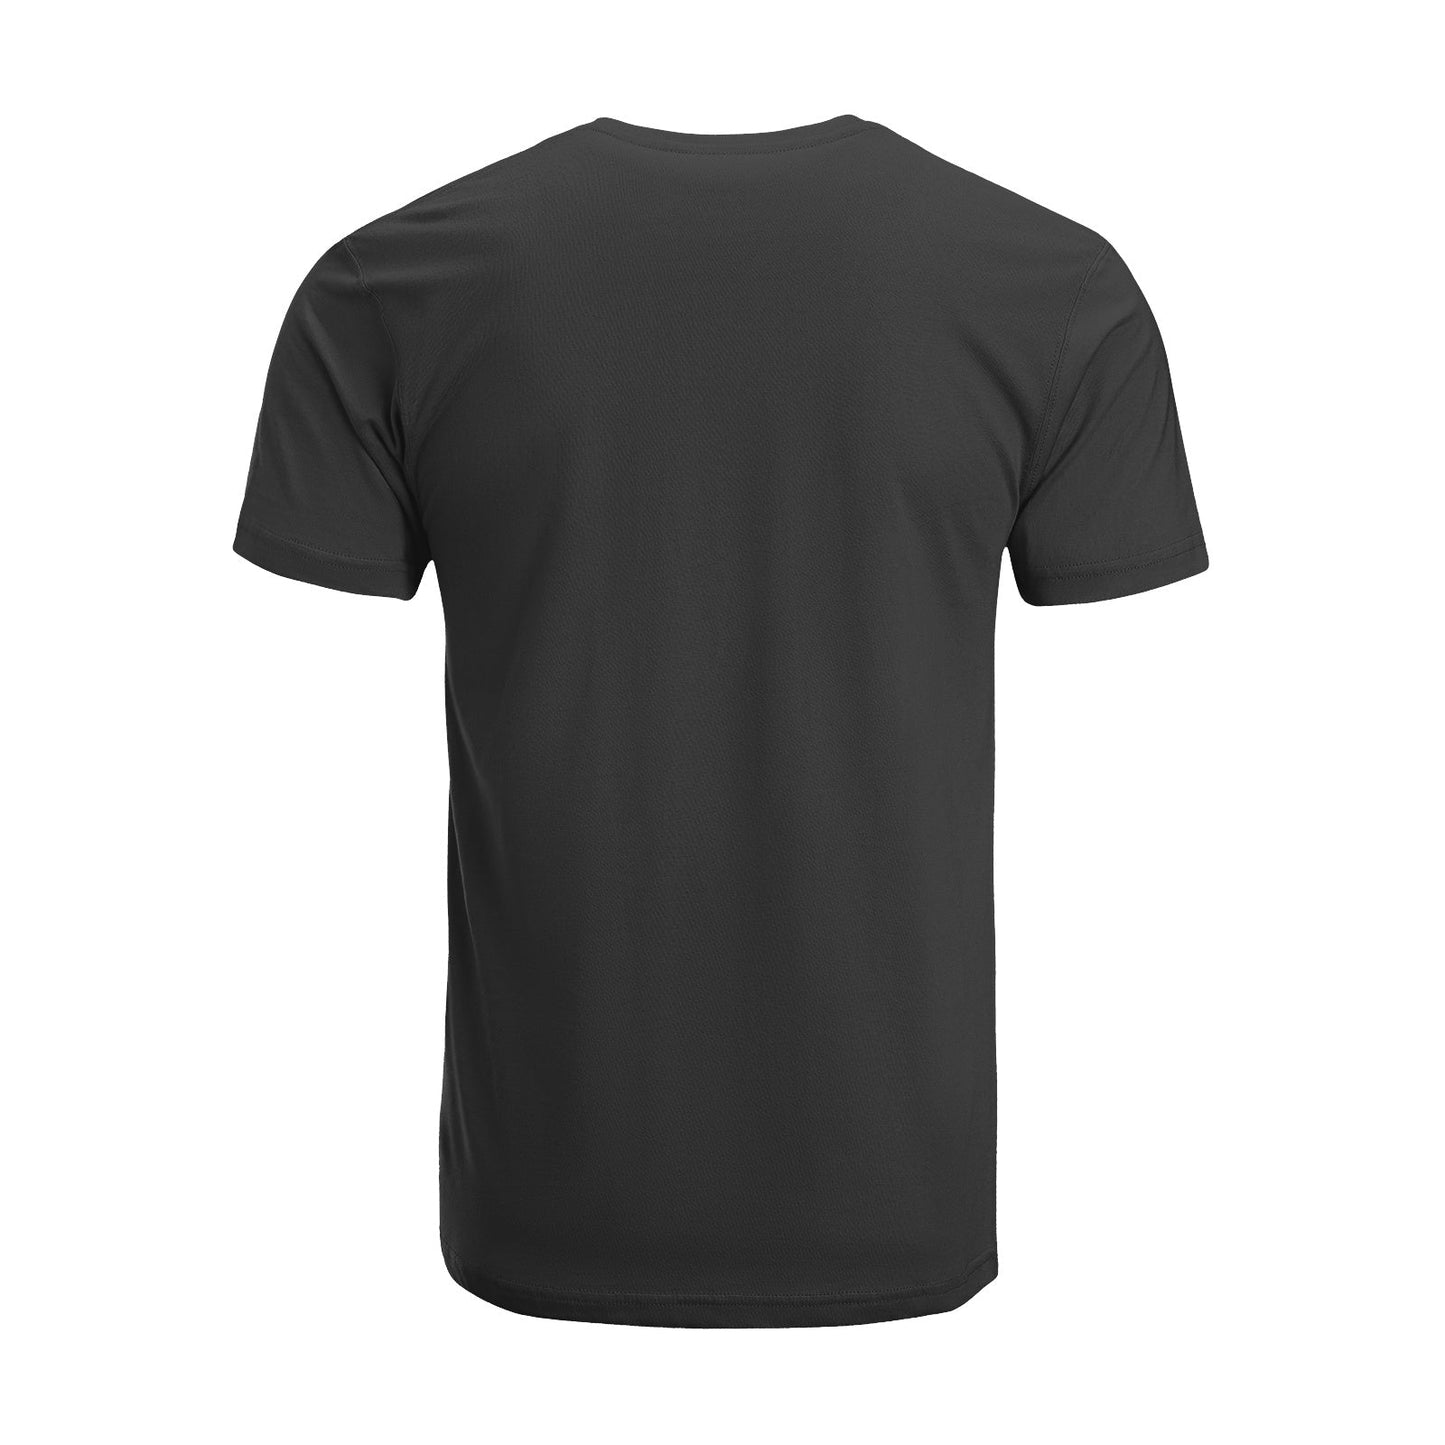 Unisex Short Sleeve Crew Neck Cotton Jersey T-Shirt MOM 16